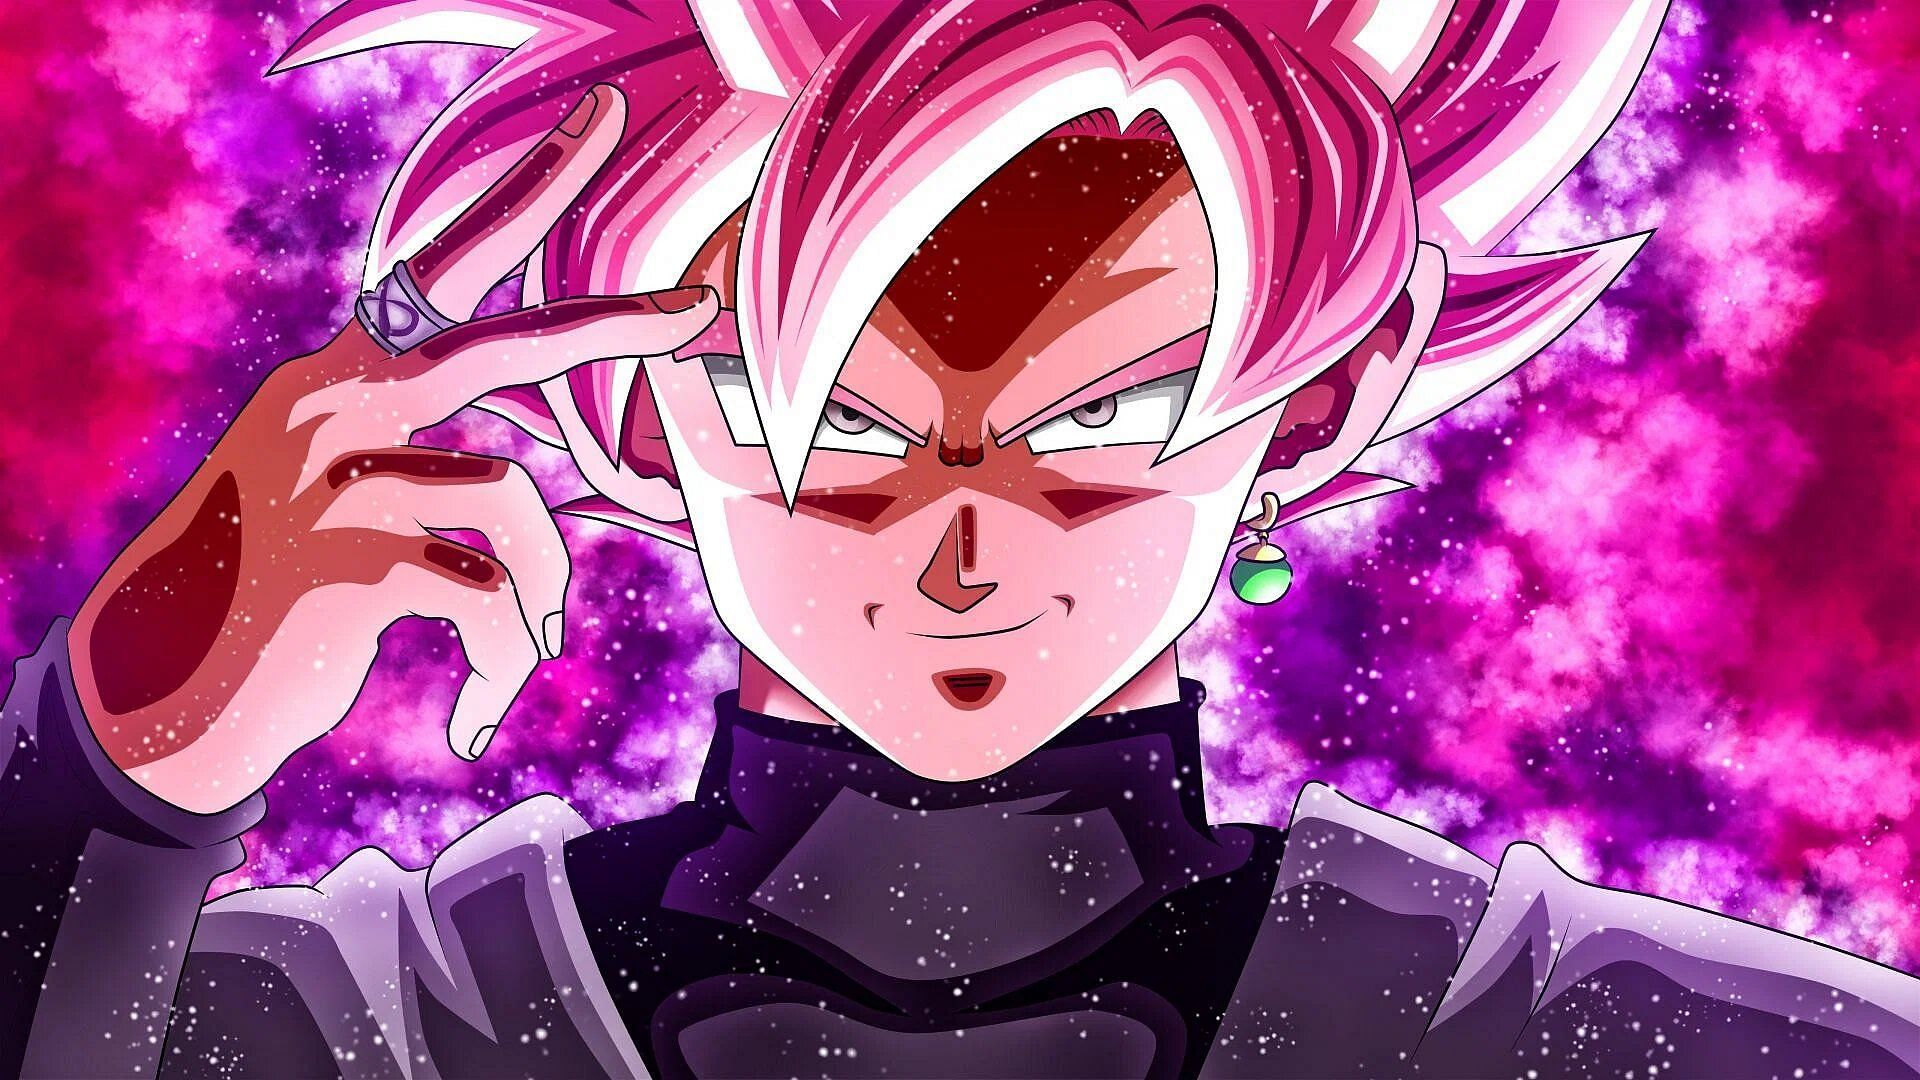 Goku Black as seen in the anime series (Image via Toei Animation)